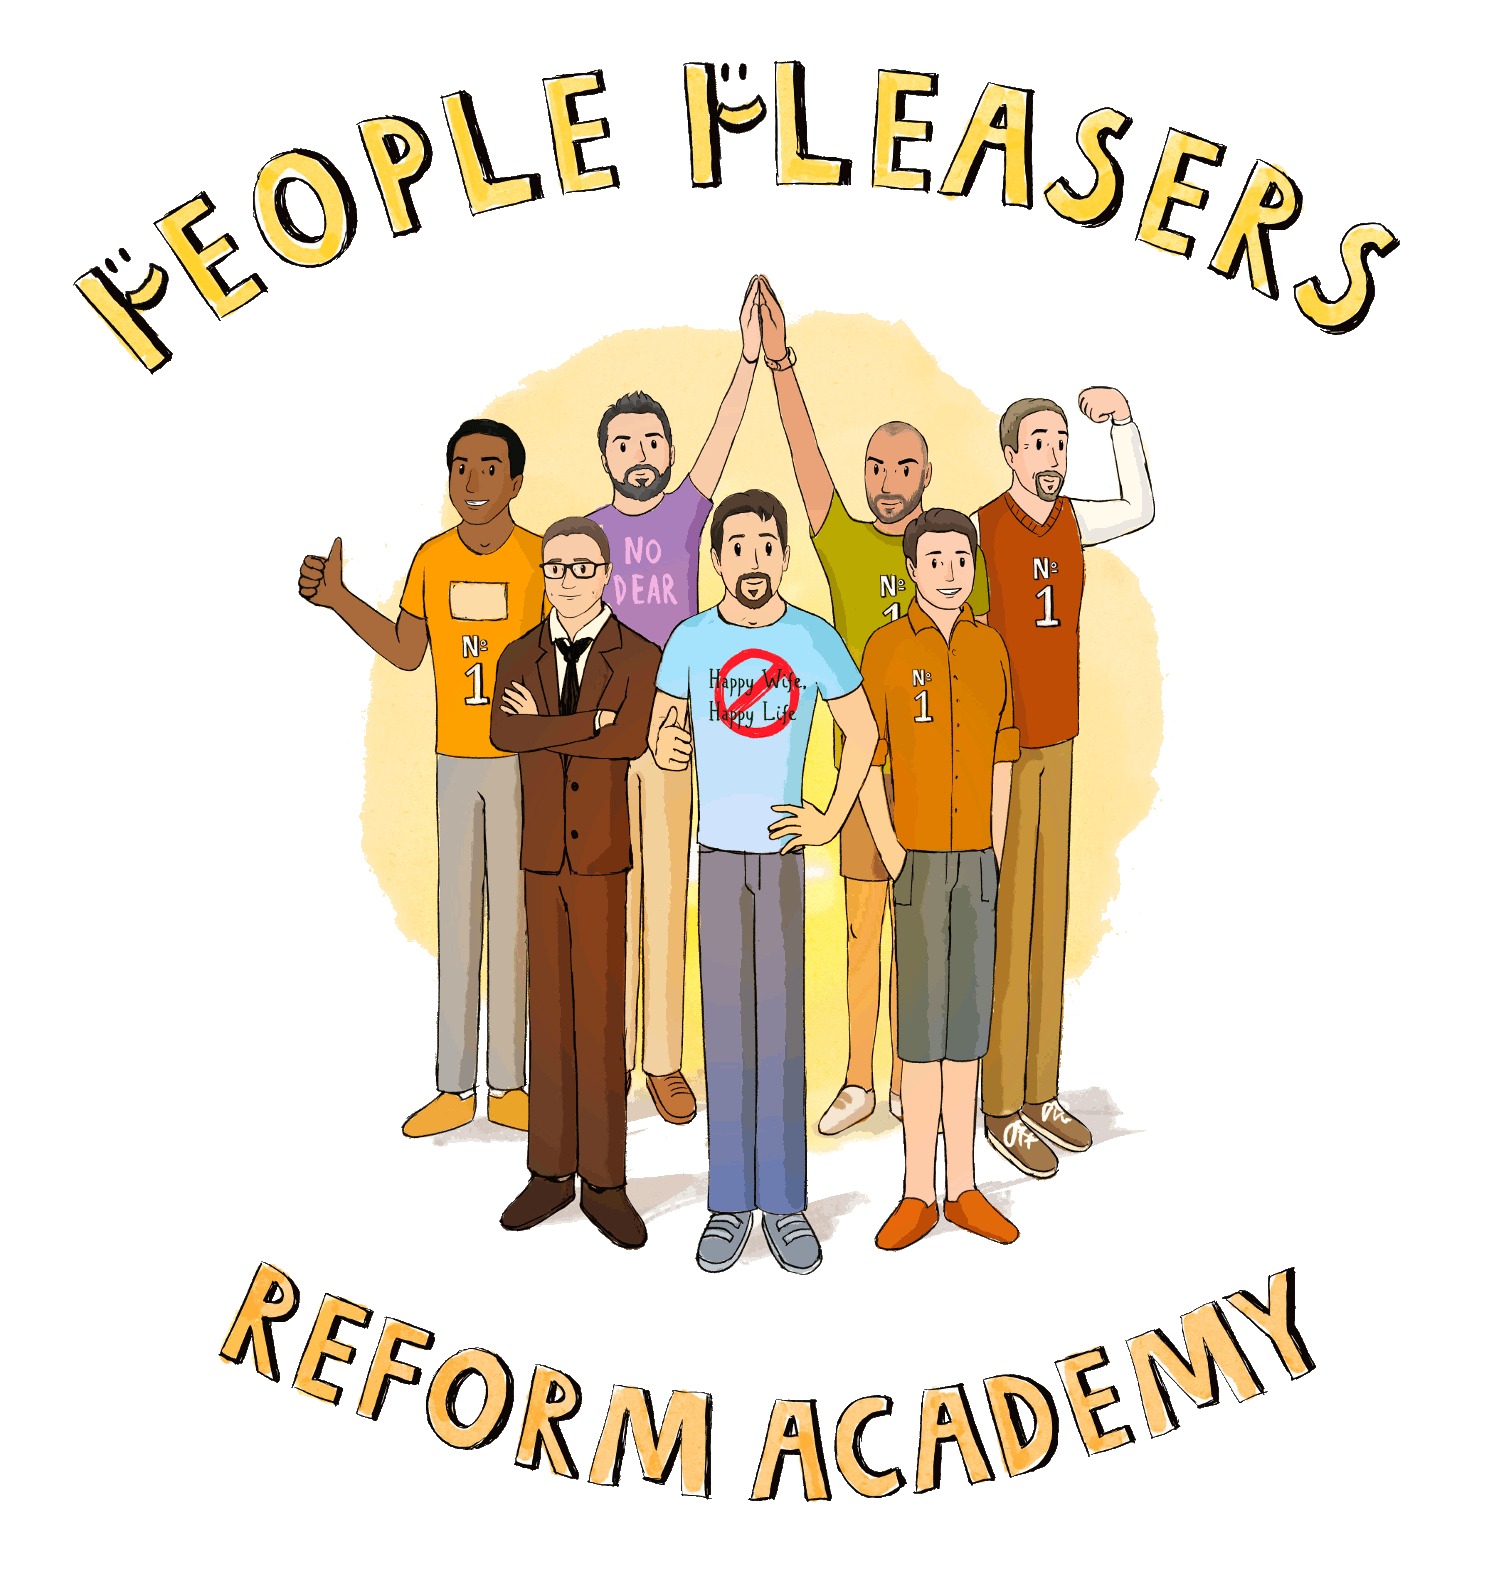 People Pleaser's Reform Academy for Men